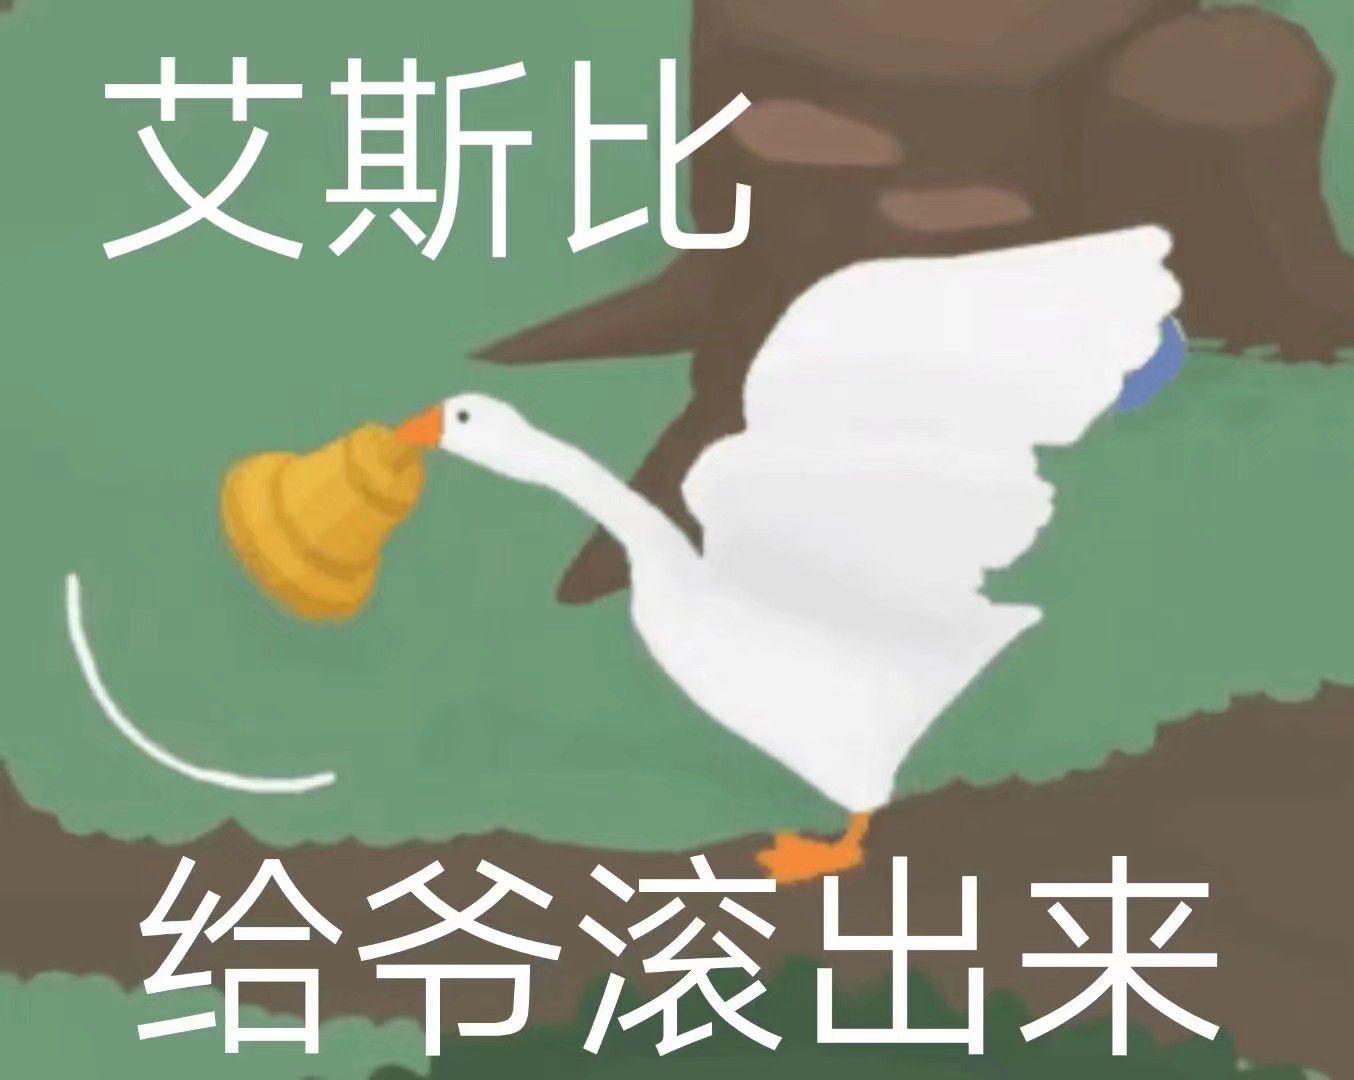 [Switch] 大鹅模拟 Untitled Goose Game 通关流程 第3关_哔哩哔哩_bilibili